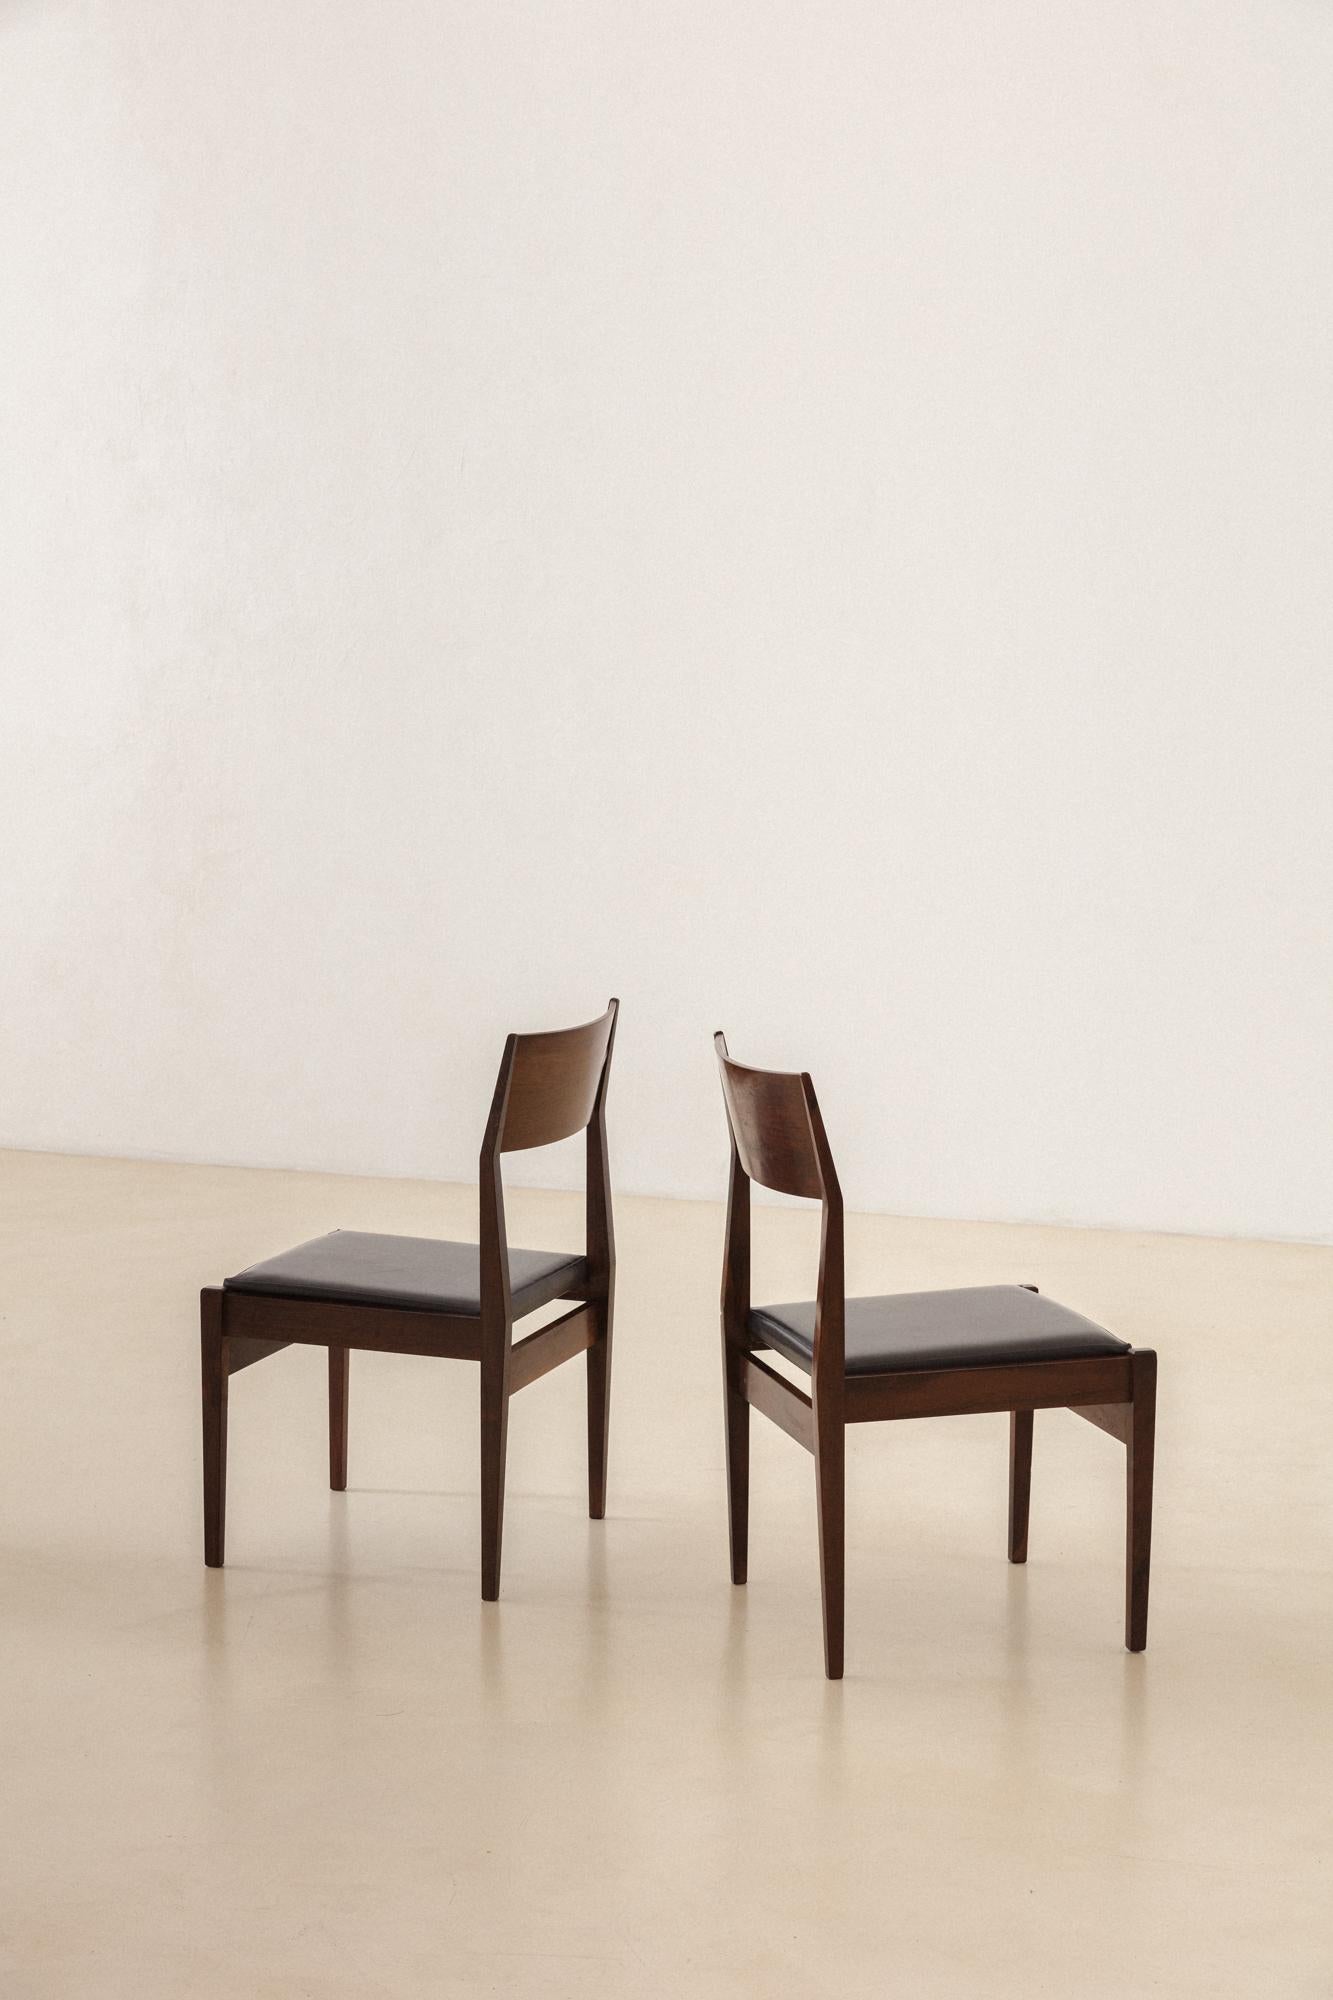 Brazilian Iadê Rosewood Dining Chairs, Italo Bianchi, 1950s For Sale